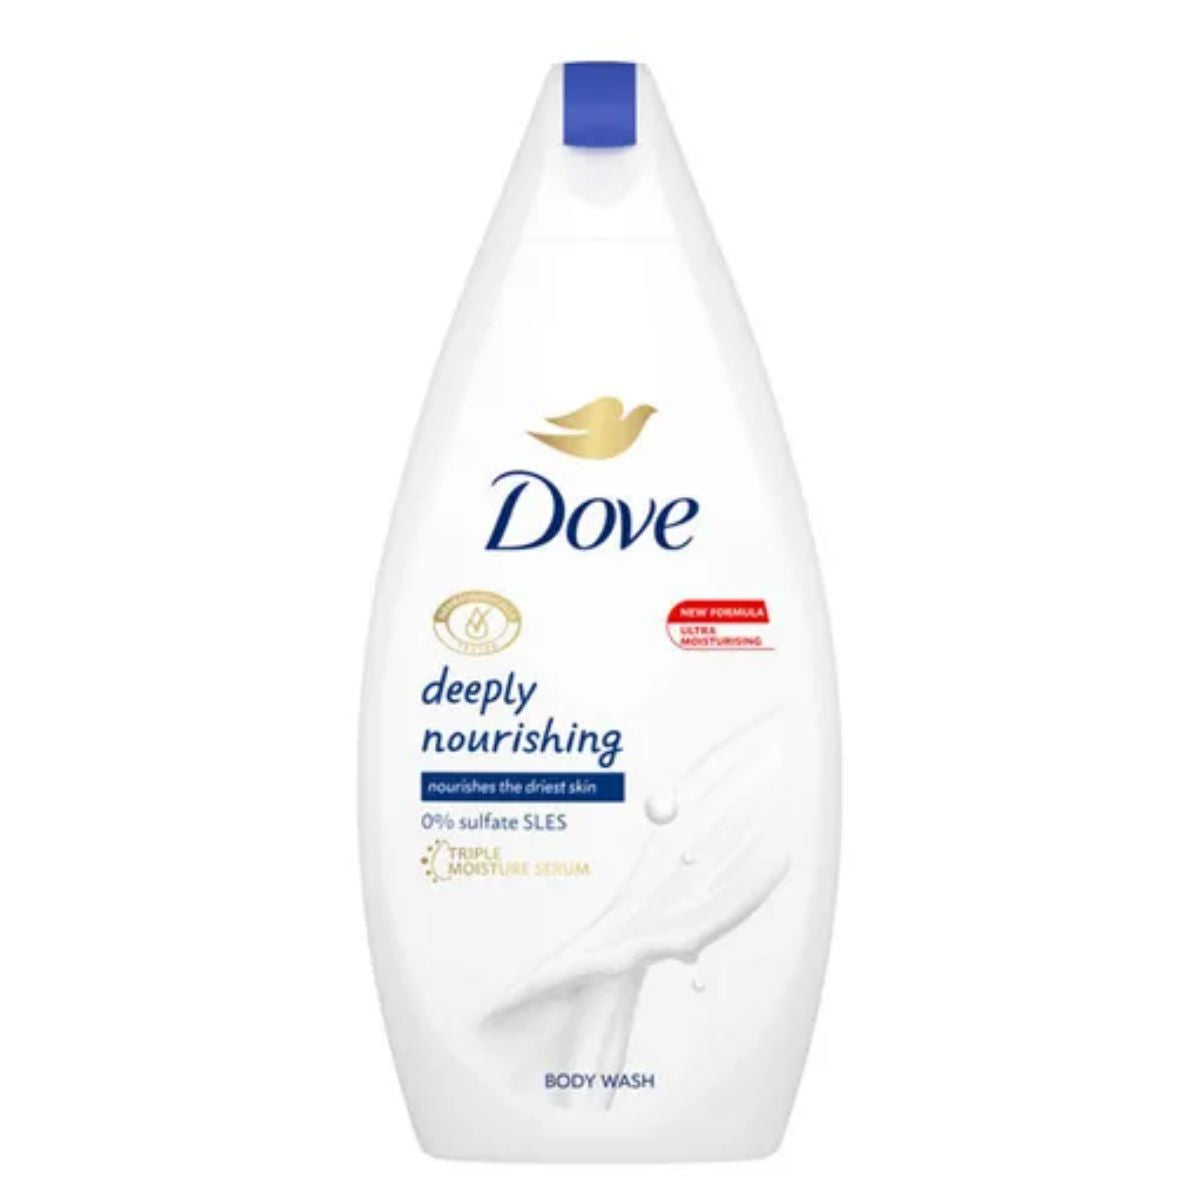 Dove - Body Wash Deeply Nourishing - 450ml deeply moisturizing body wash.